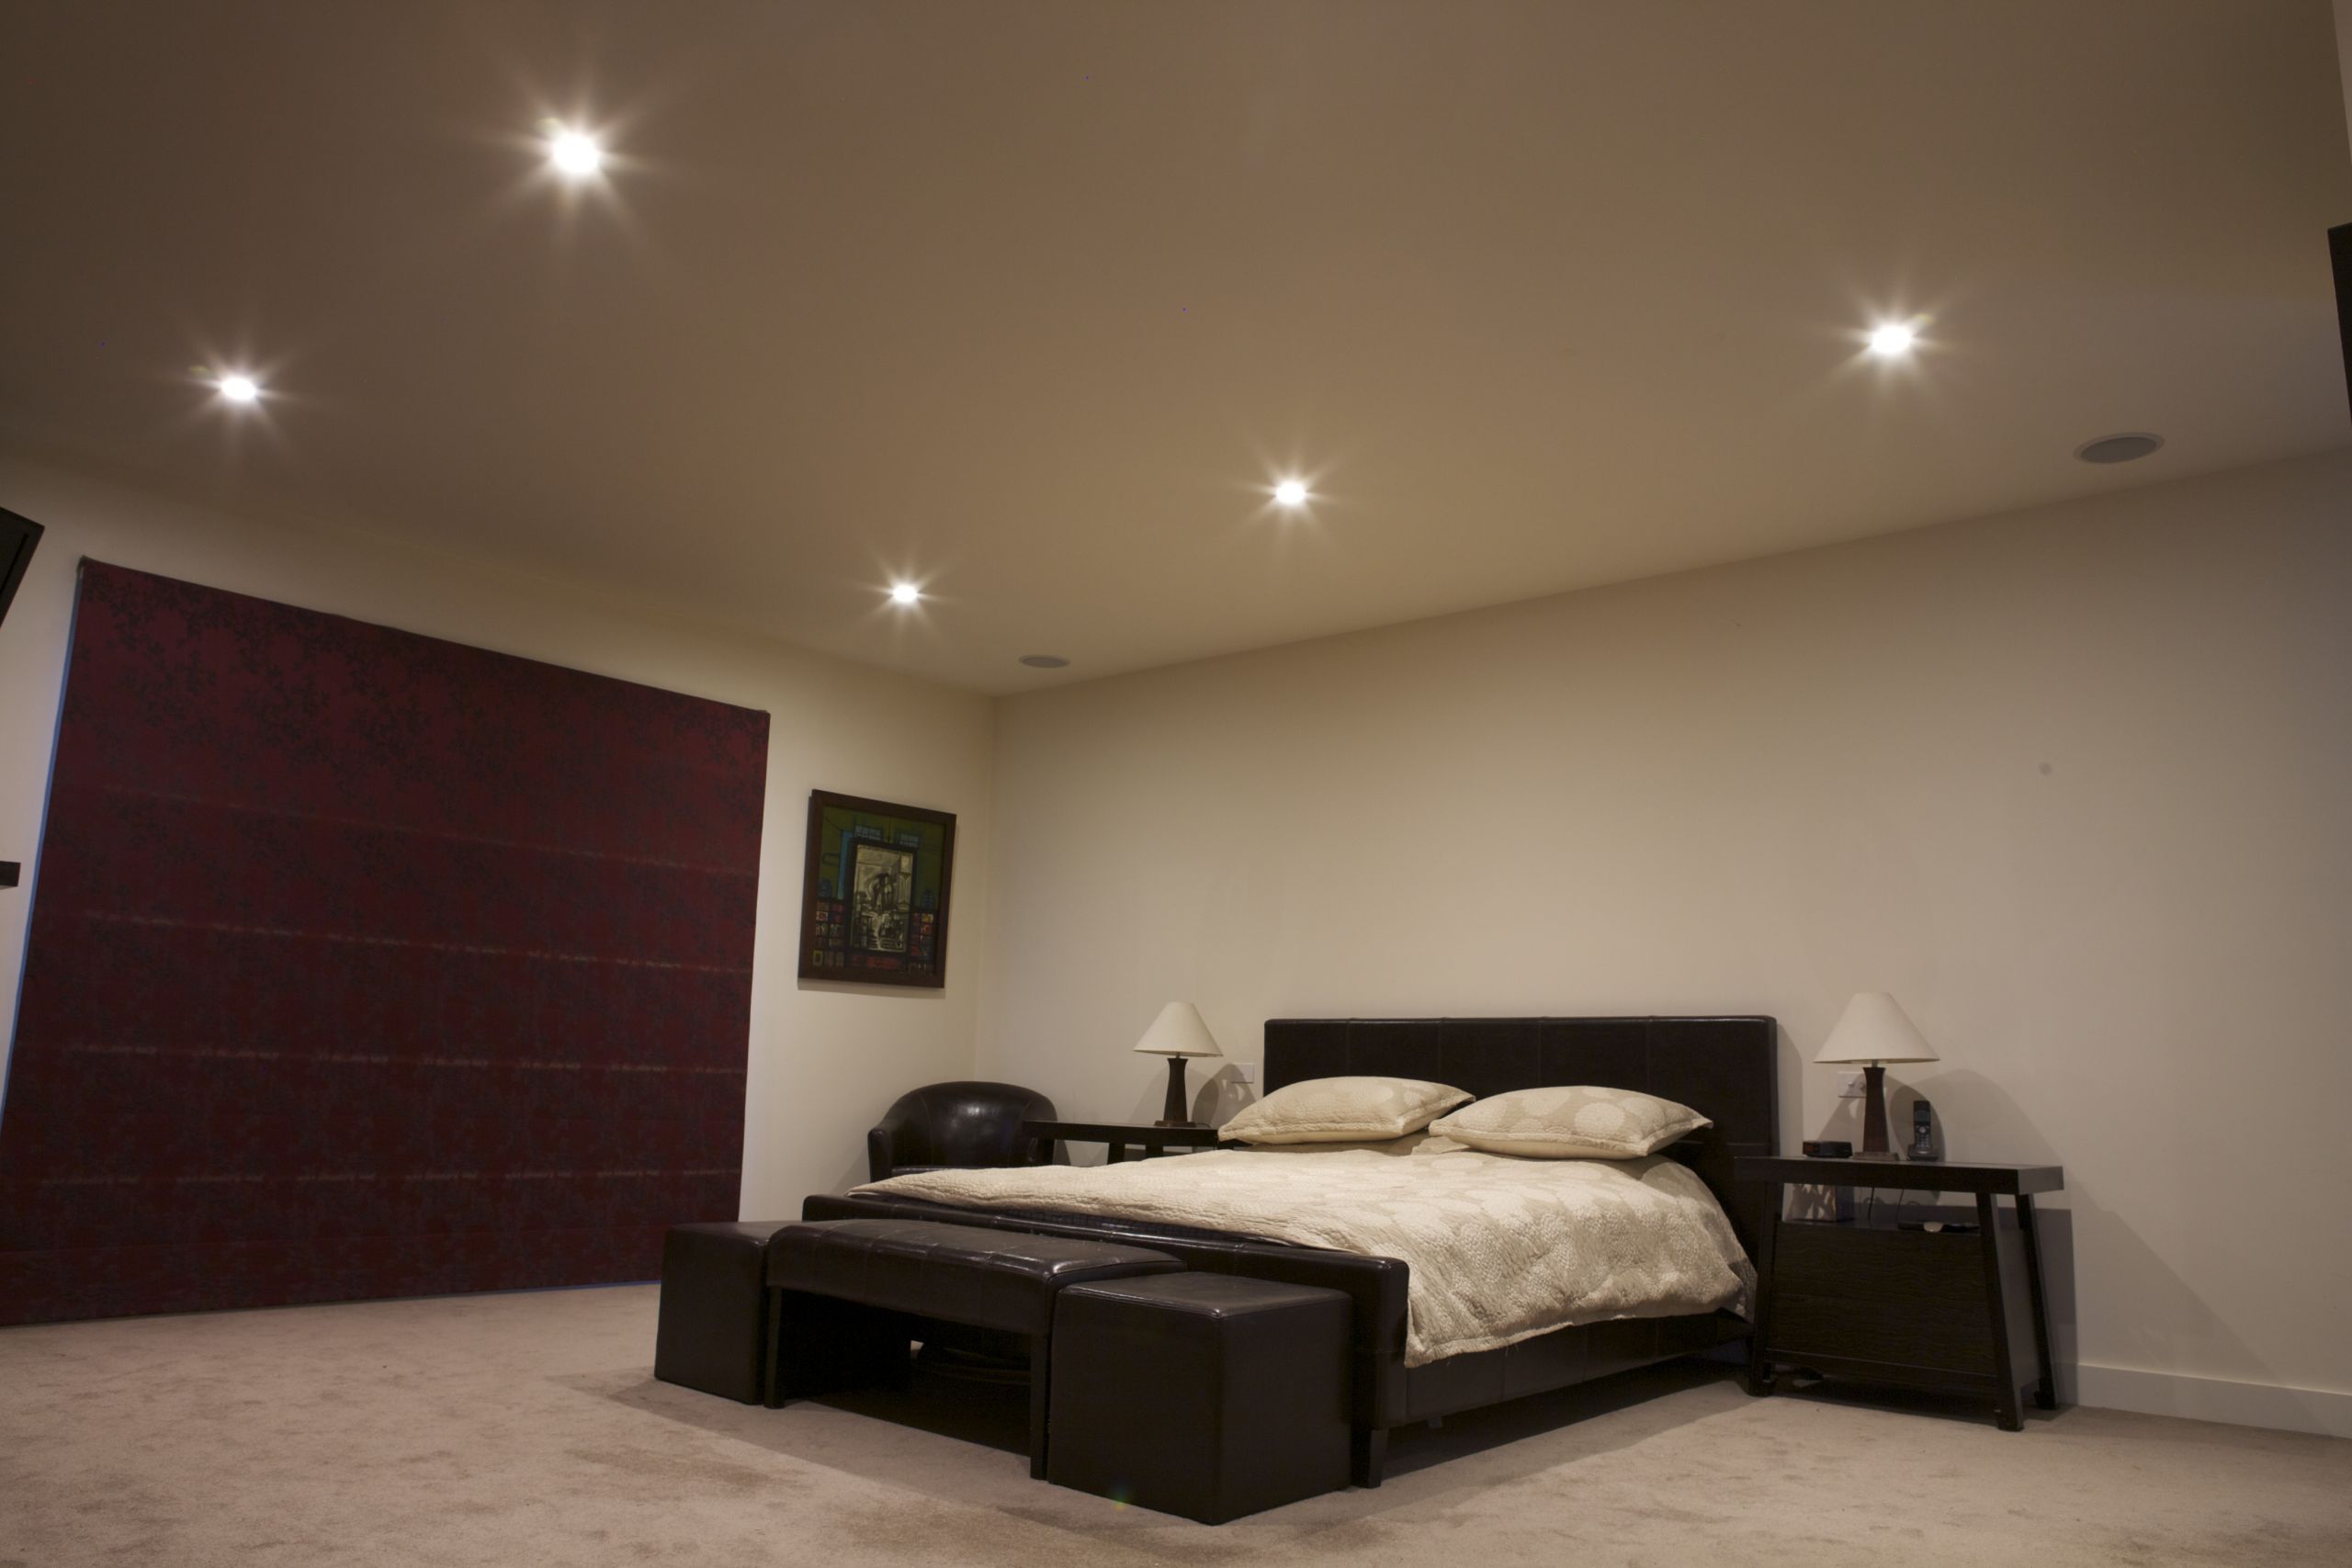 Led Light Bedroom
 70mm or 90mm Downlights Choosing LED lights